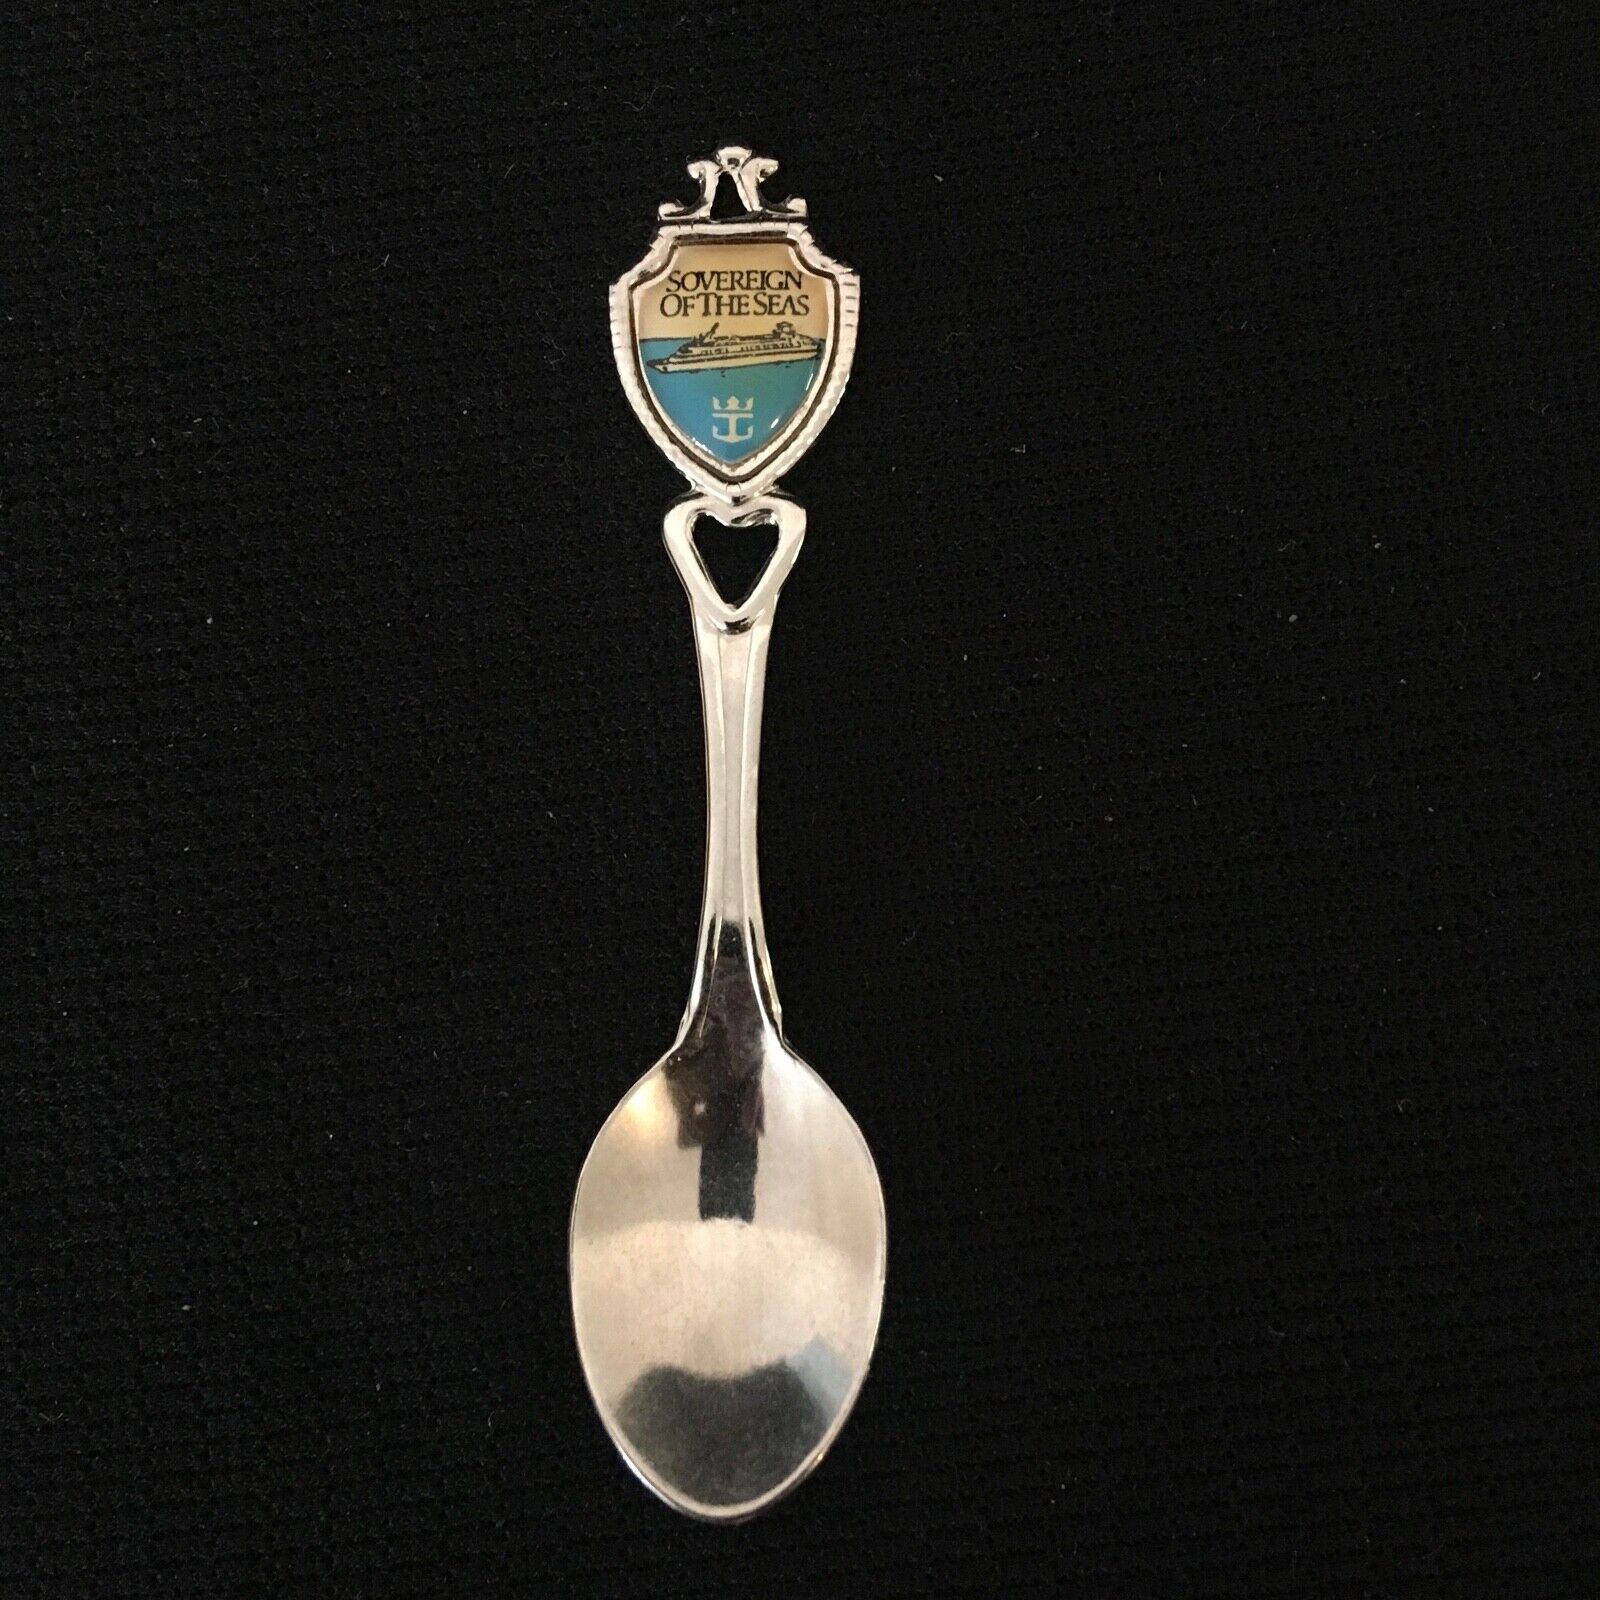 Vintage Sovereign of the Seas Souvenir Spoon